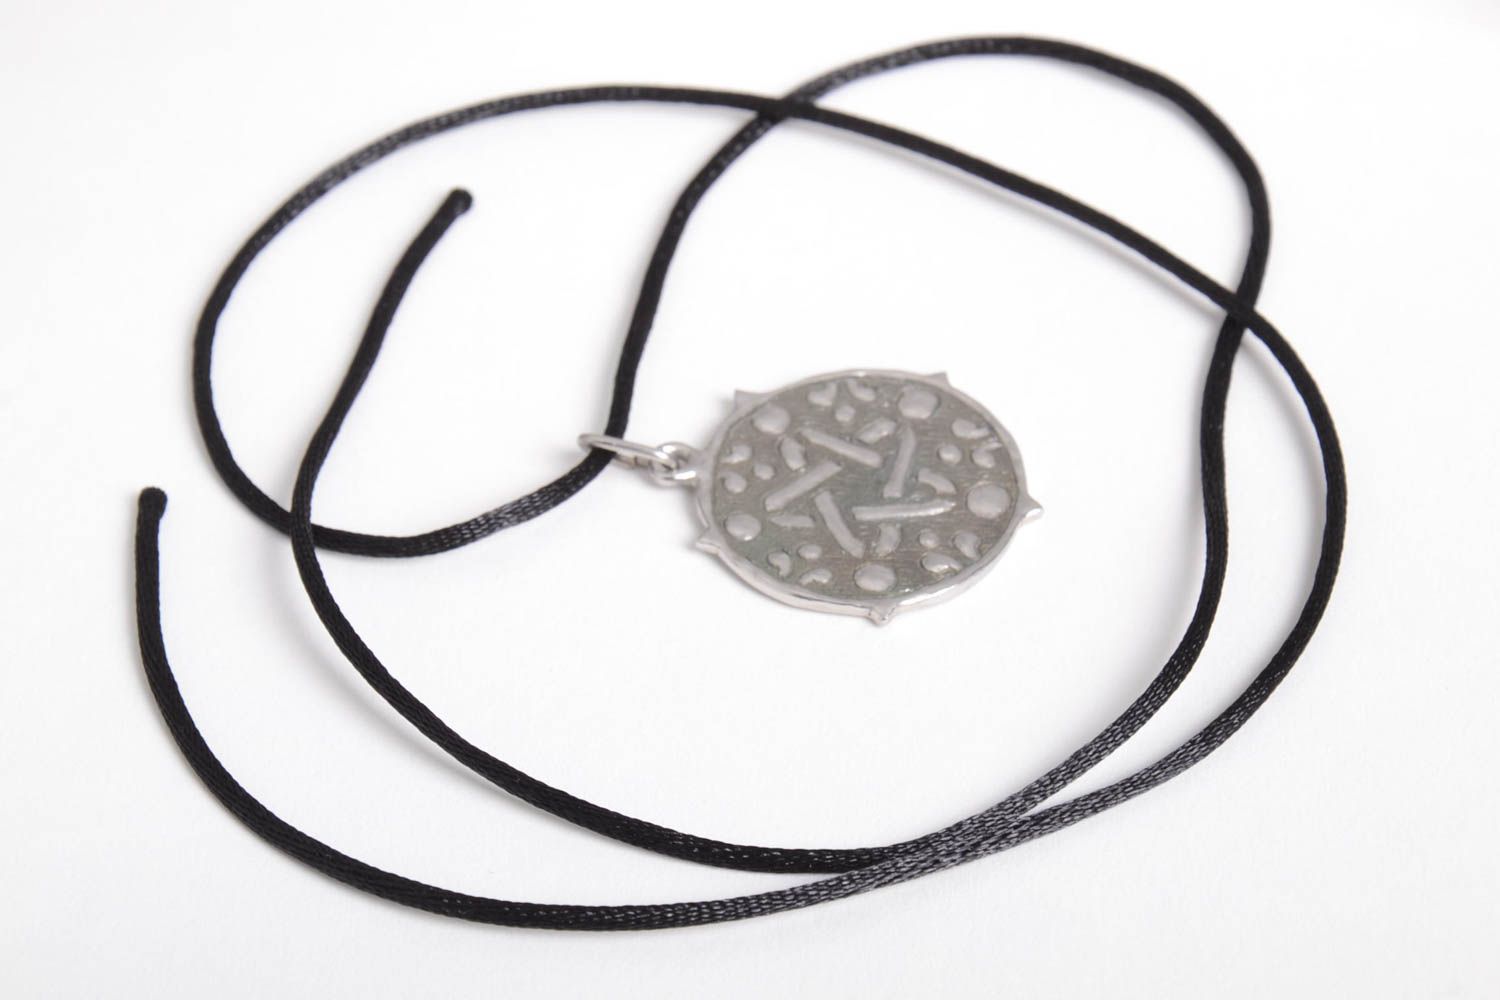 Unusual handmade metal pendant beautiful jewellery metal craft gift ideas photo 5